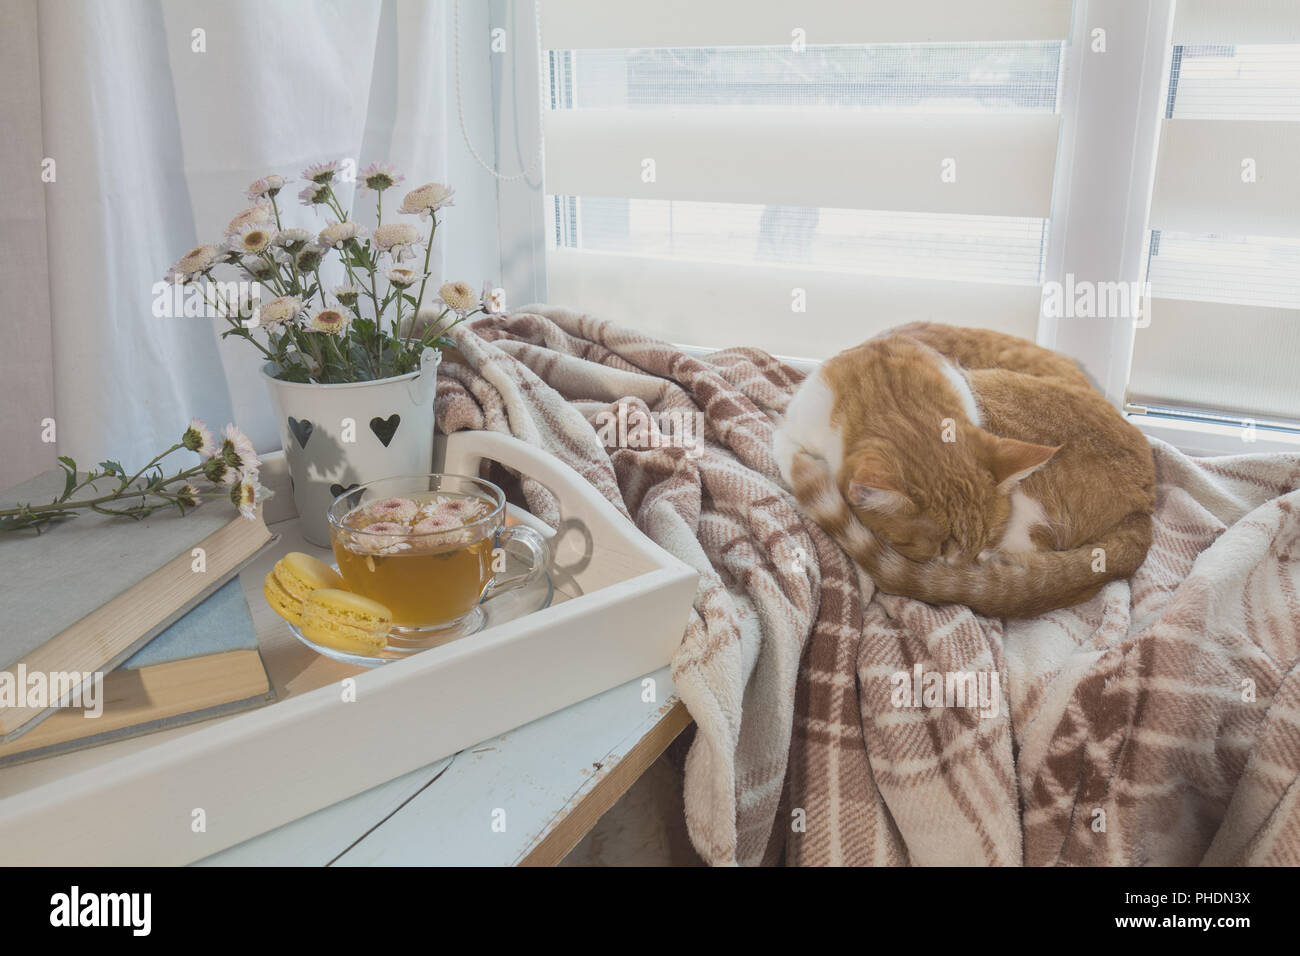 Sweet Home con flores, té y un gato Foto de stock